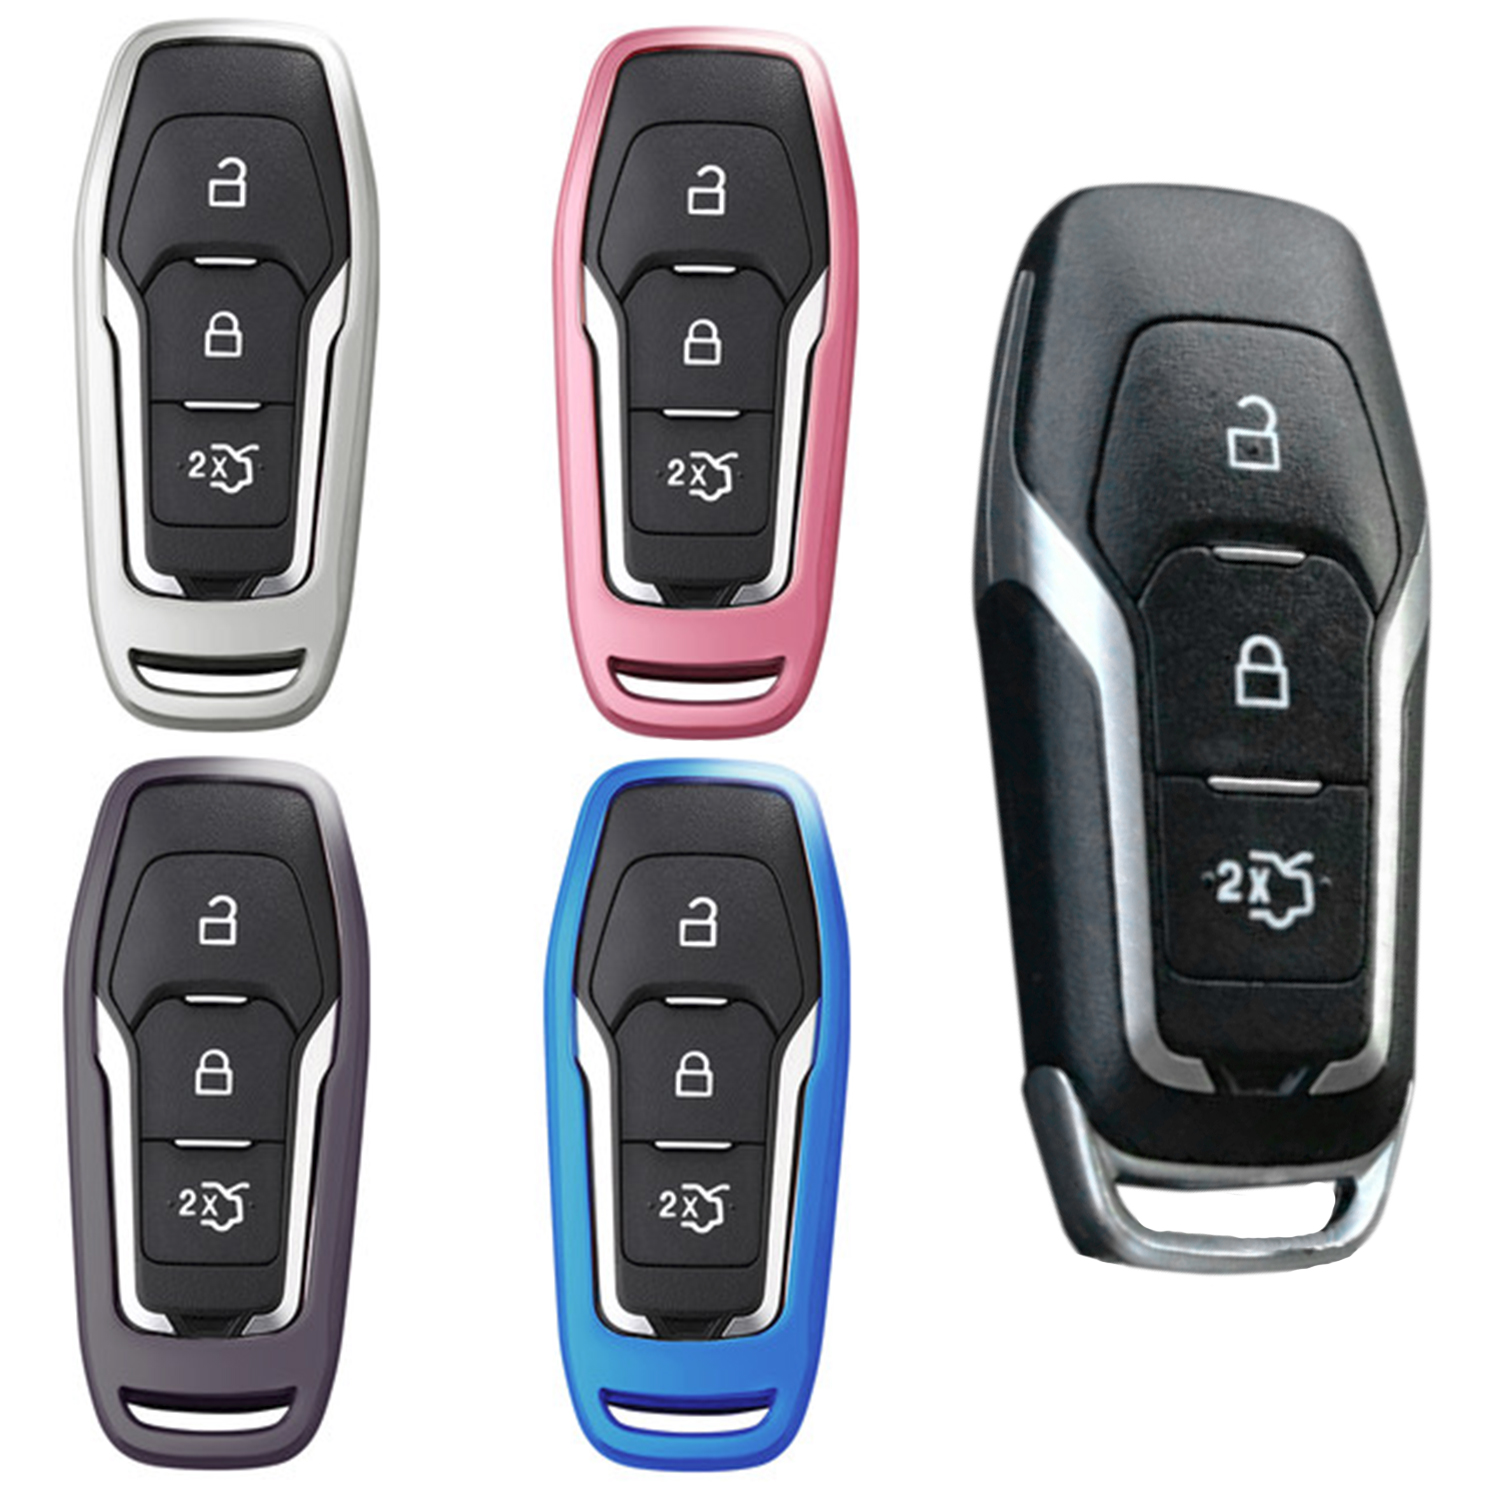 Ford Schlüssel Gehäuse - Autoschlüssel Hülle - Autoschlüssel Gehäuse